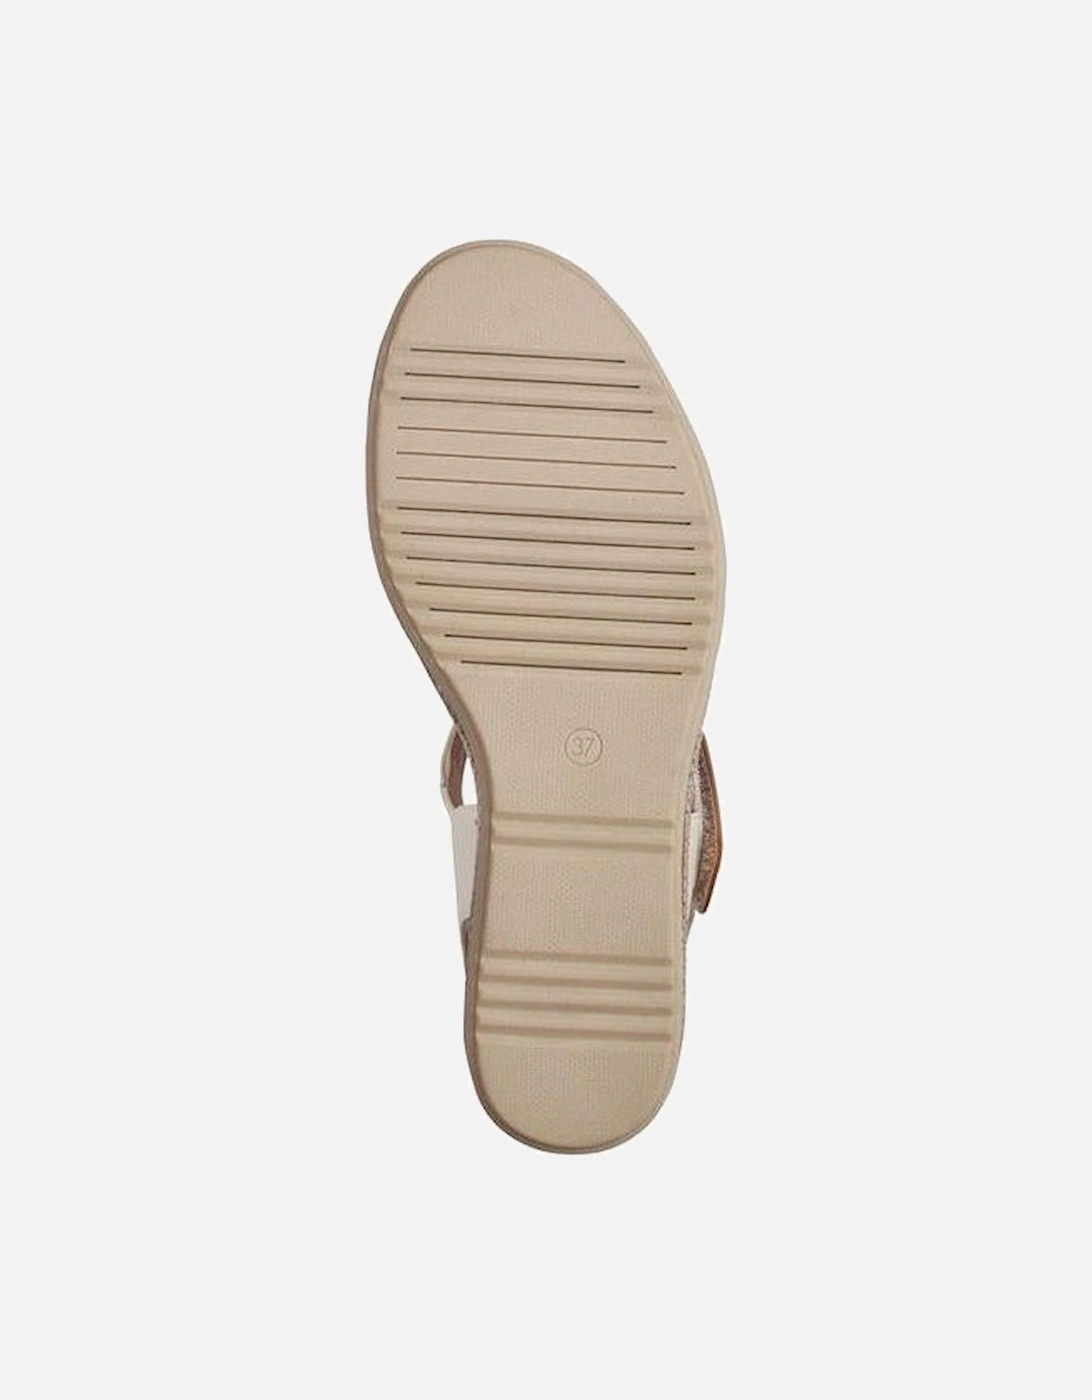 Ladies Wedge Sandals 28364 in Beige/gold